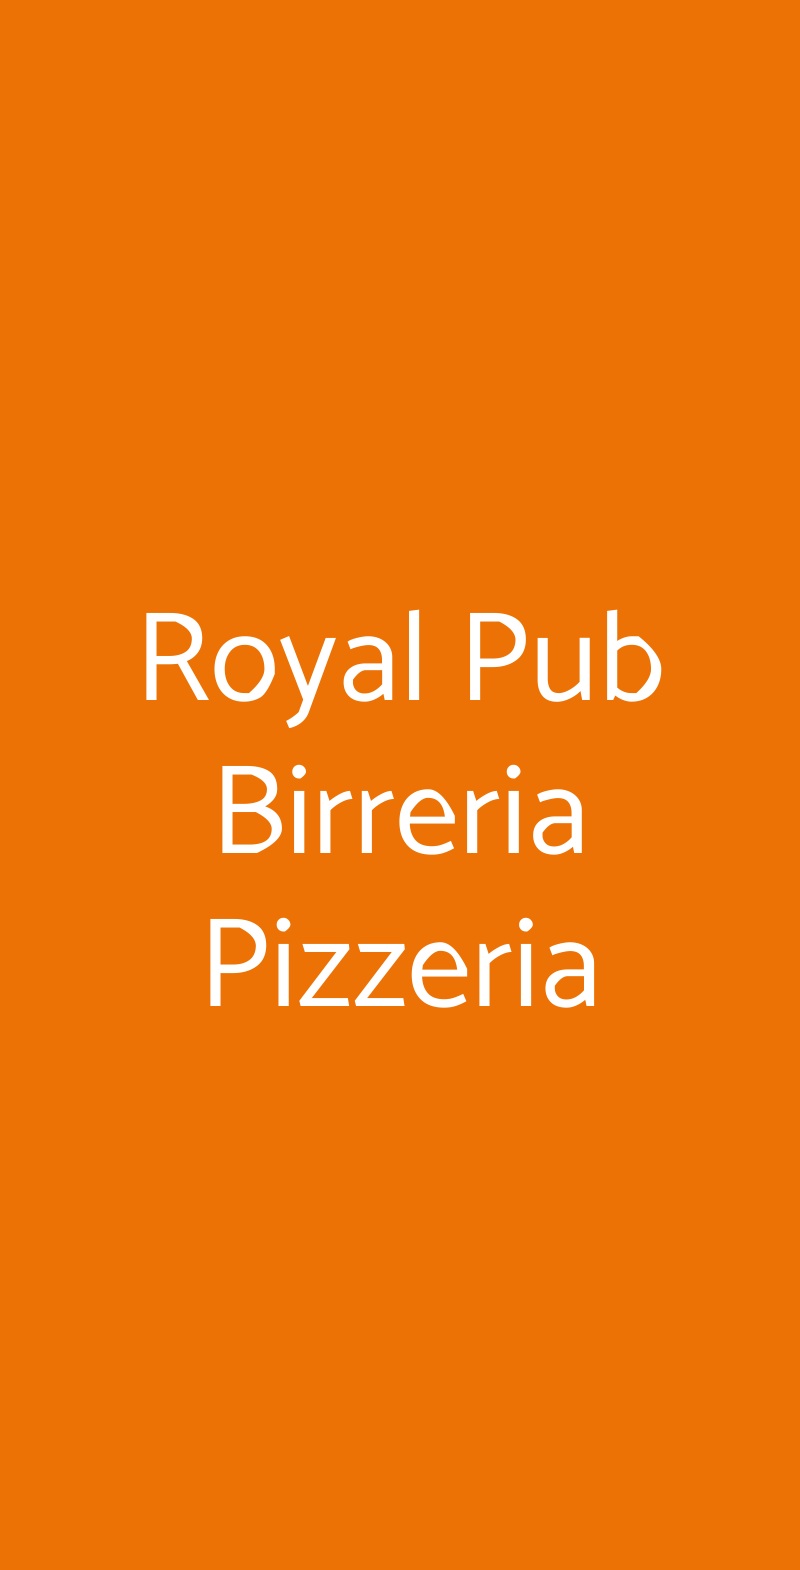 Royal Pub Birreria Pizzeria Padova menù 1 pagina